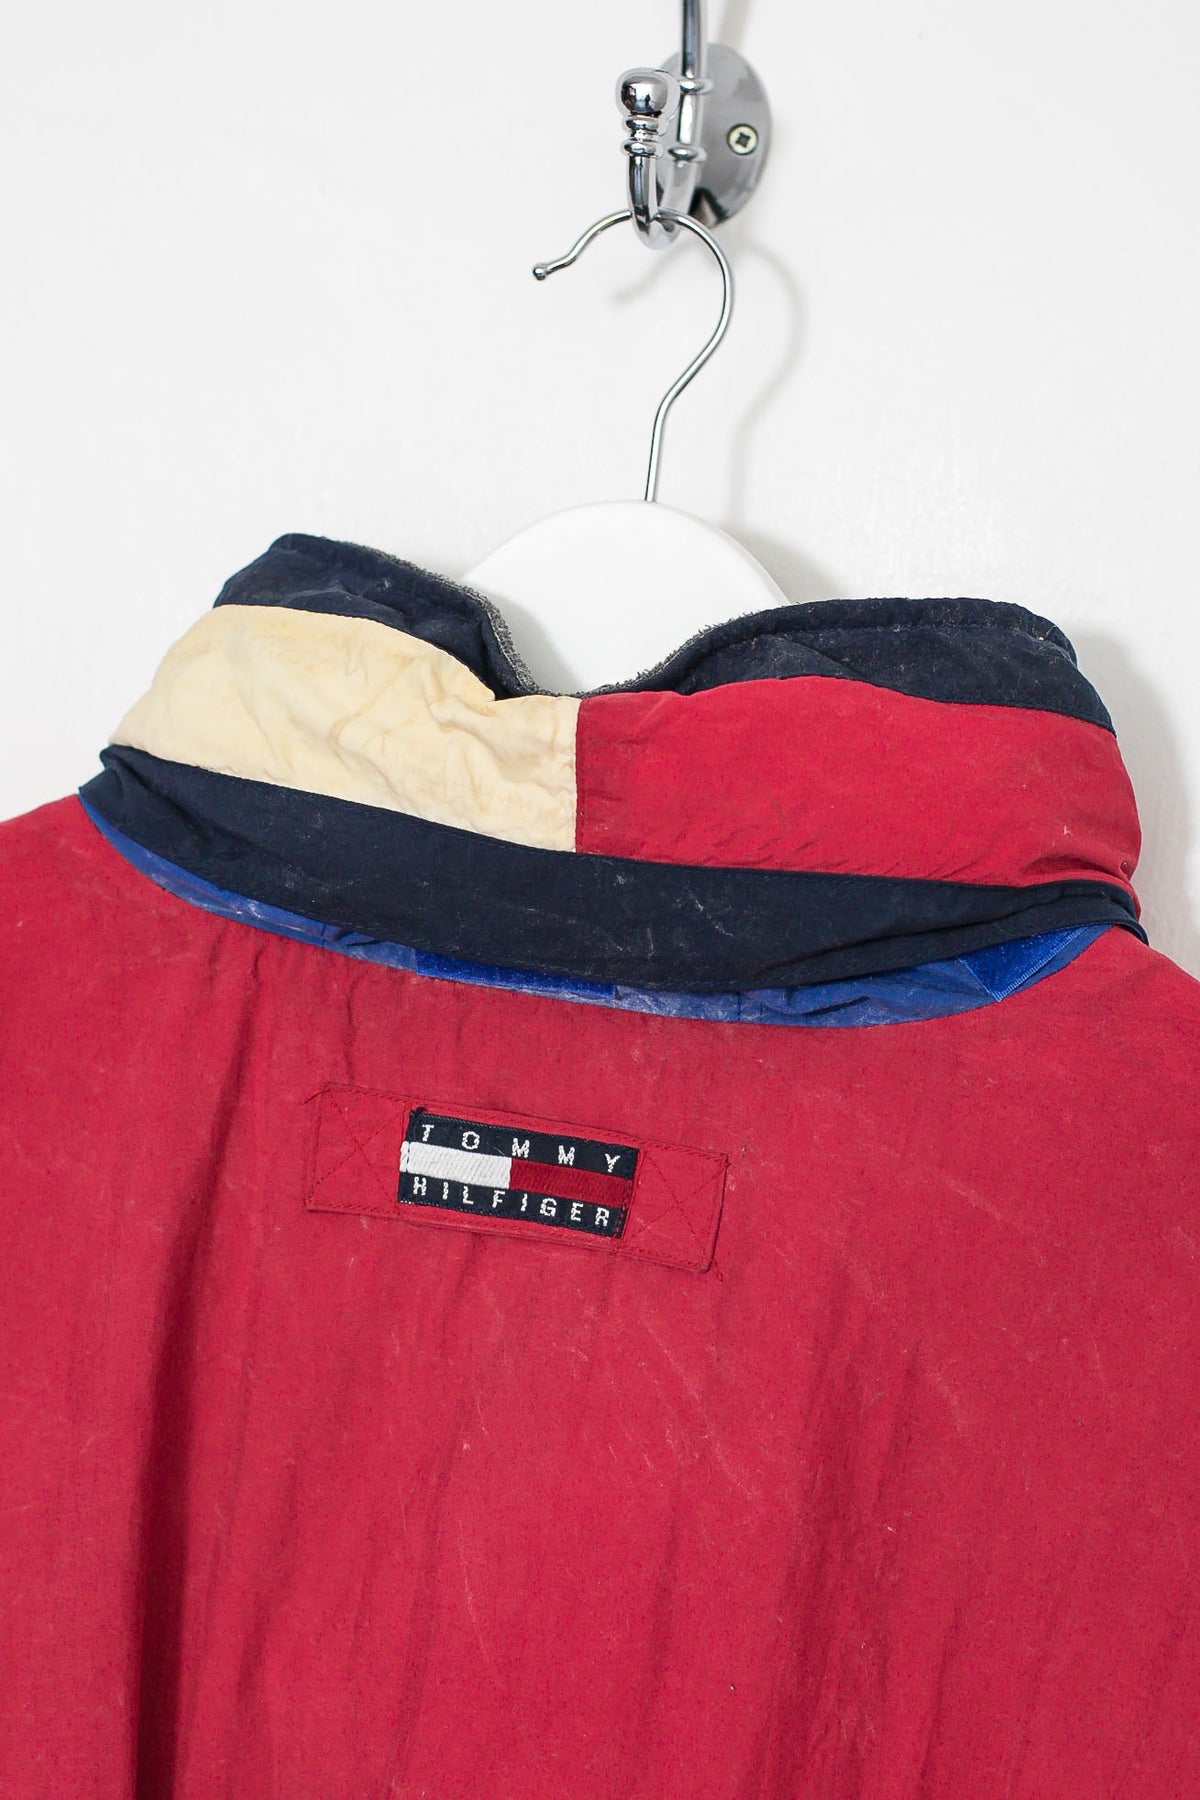 90s Tommy Hilfiger Puffer Jacket (XL)